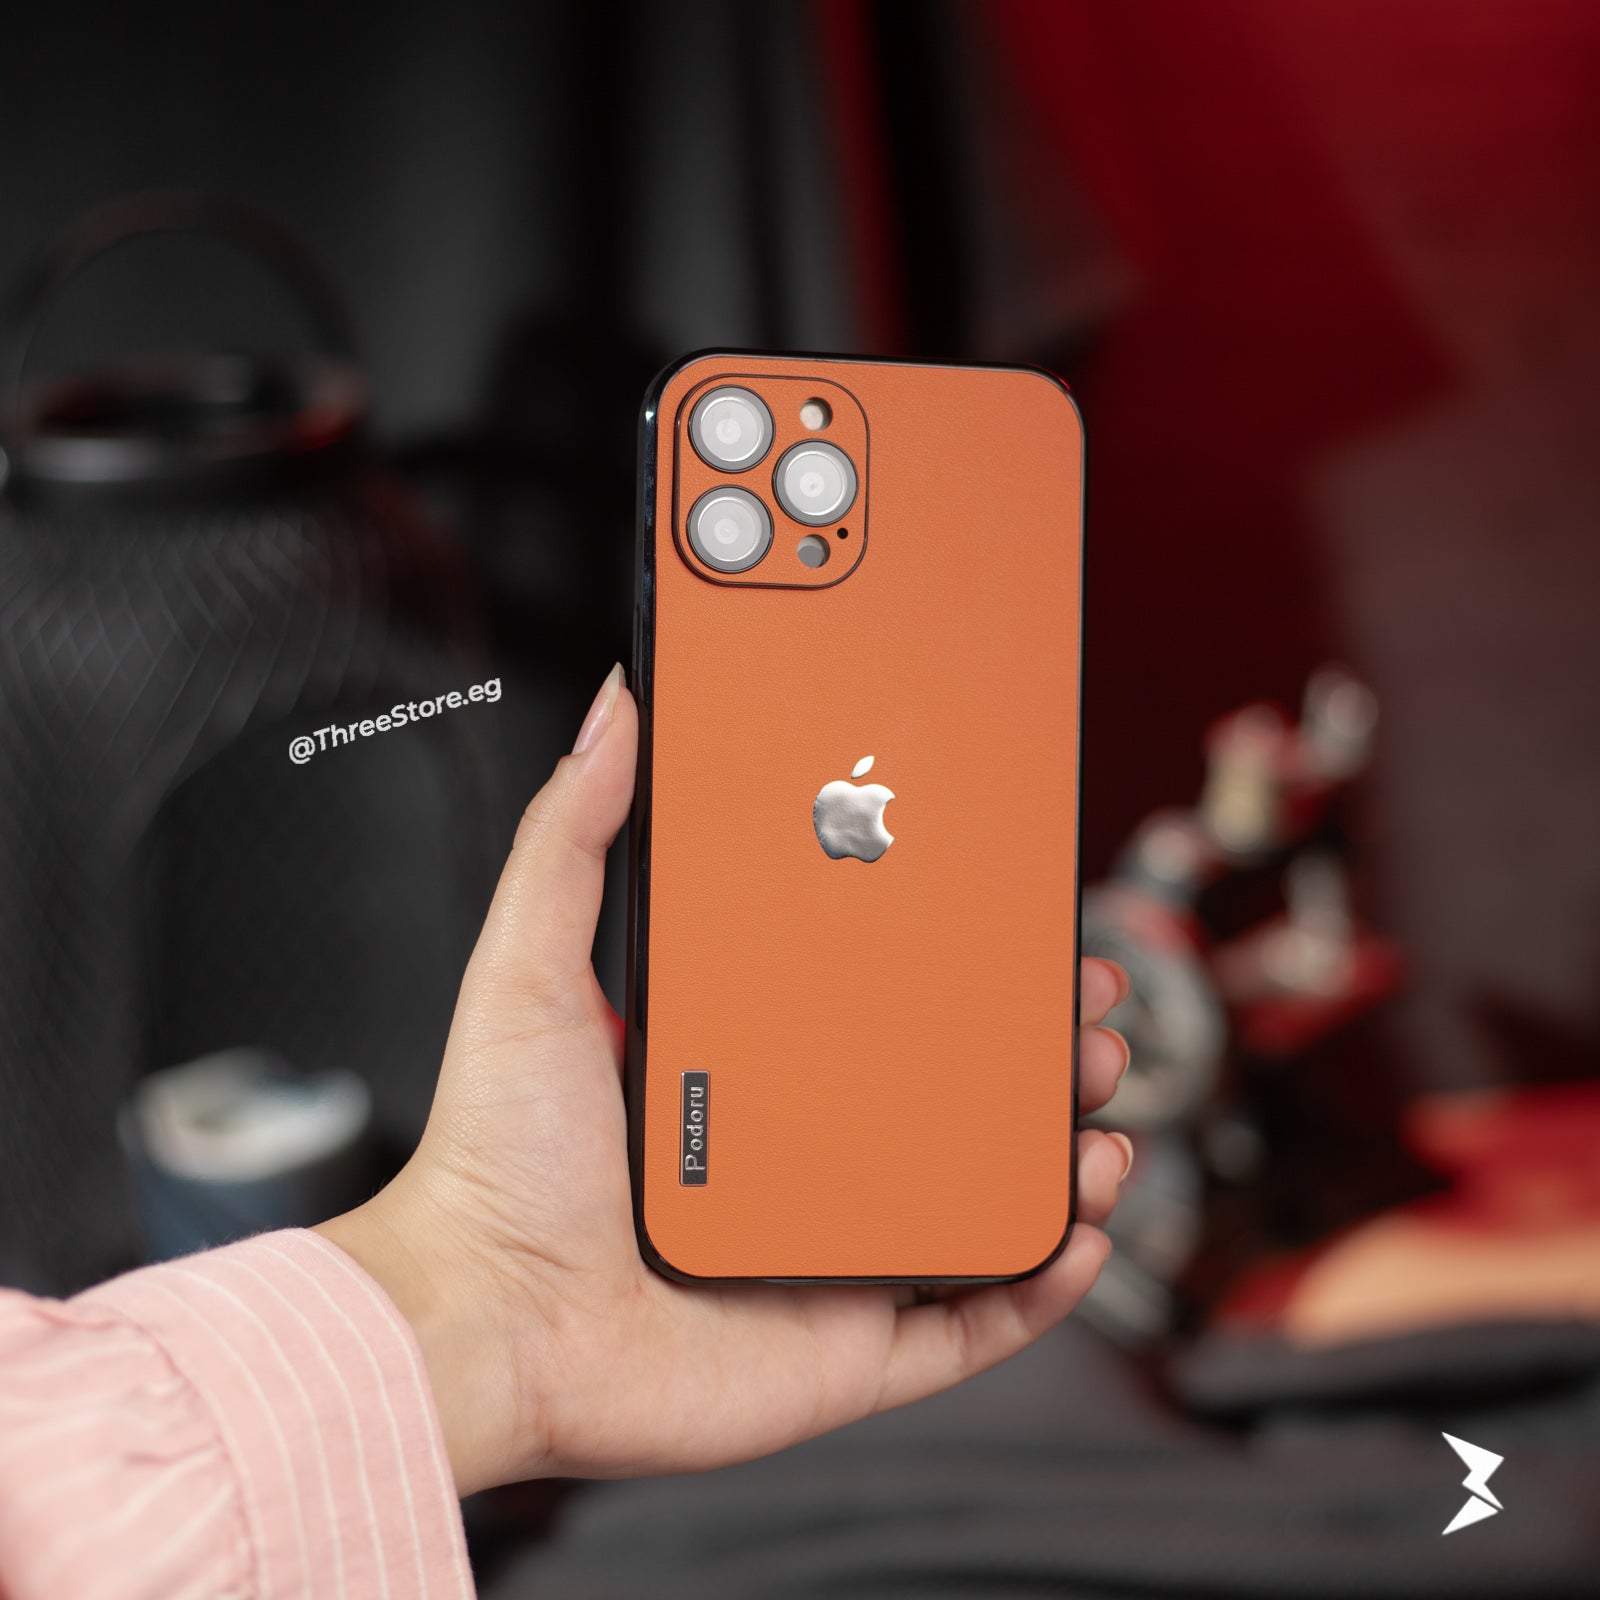 Podoru ShockProof Leather Case iPhone 12 Pro